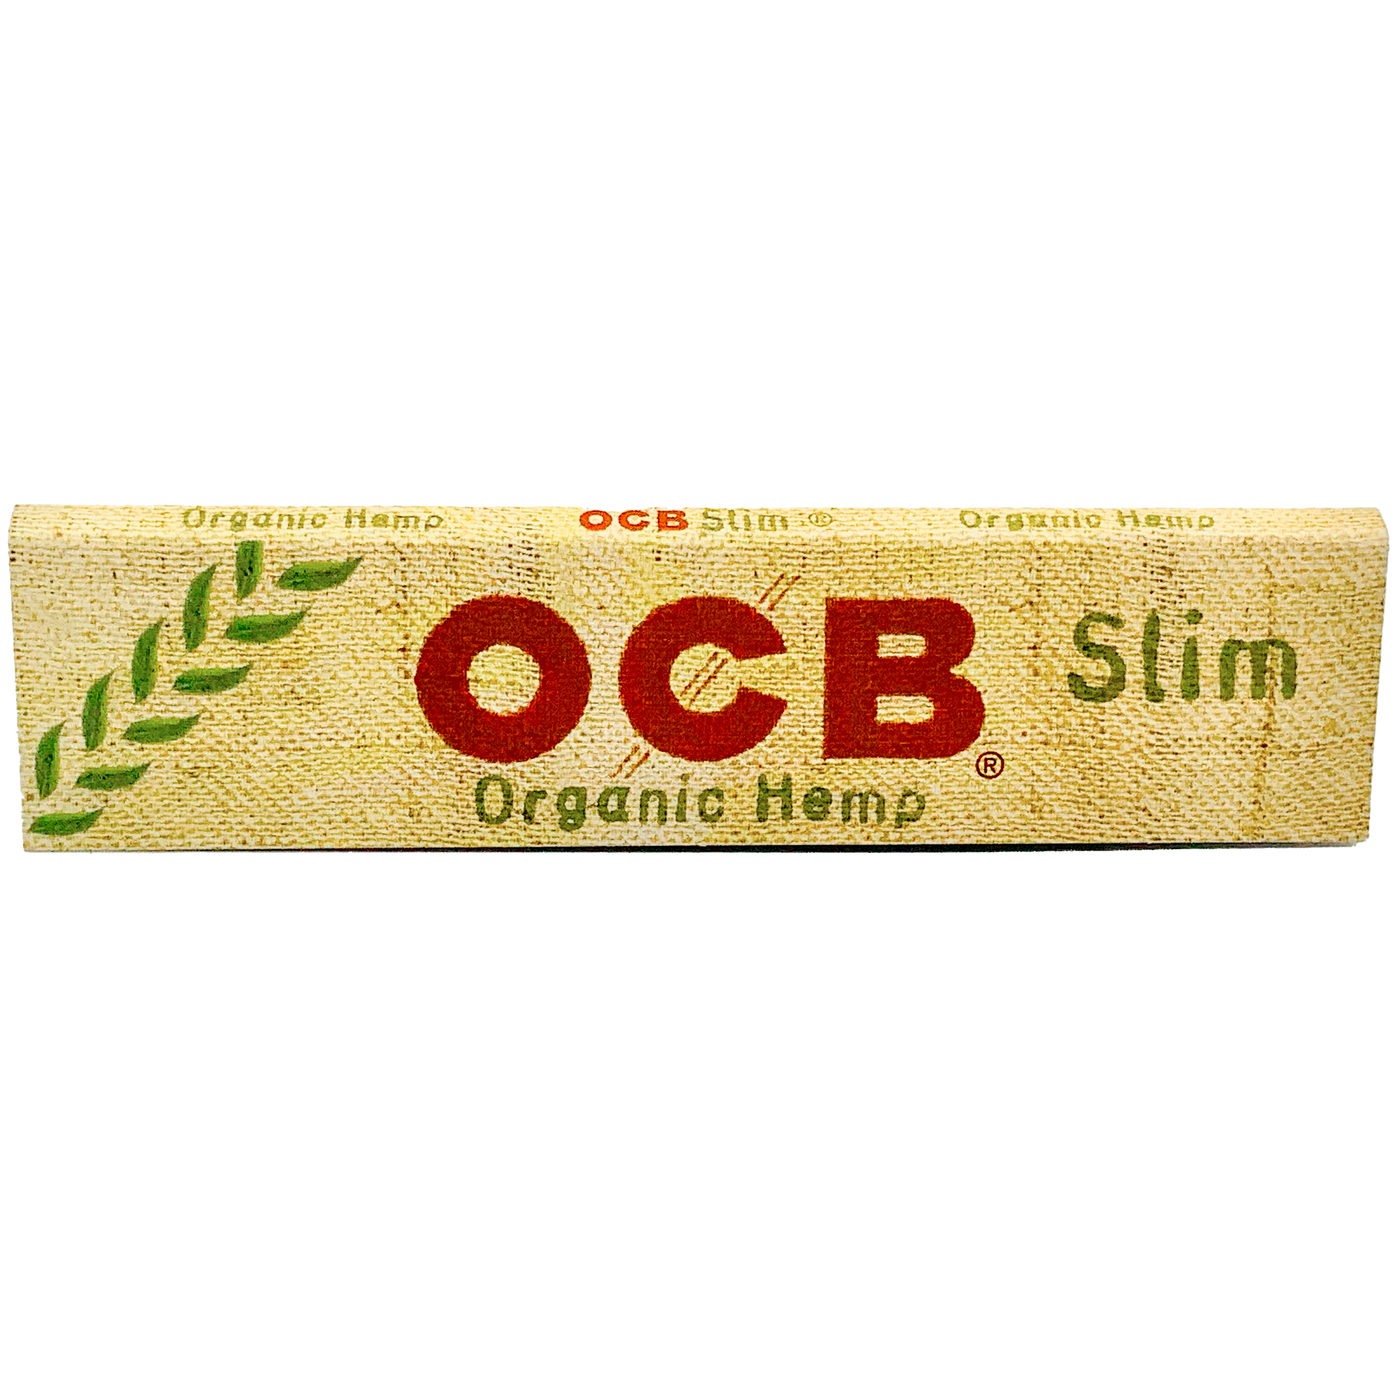 OCB Organic Hemp - Bloommart Colombia